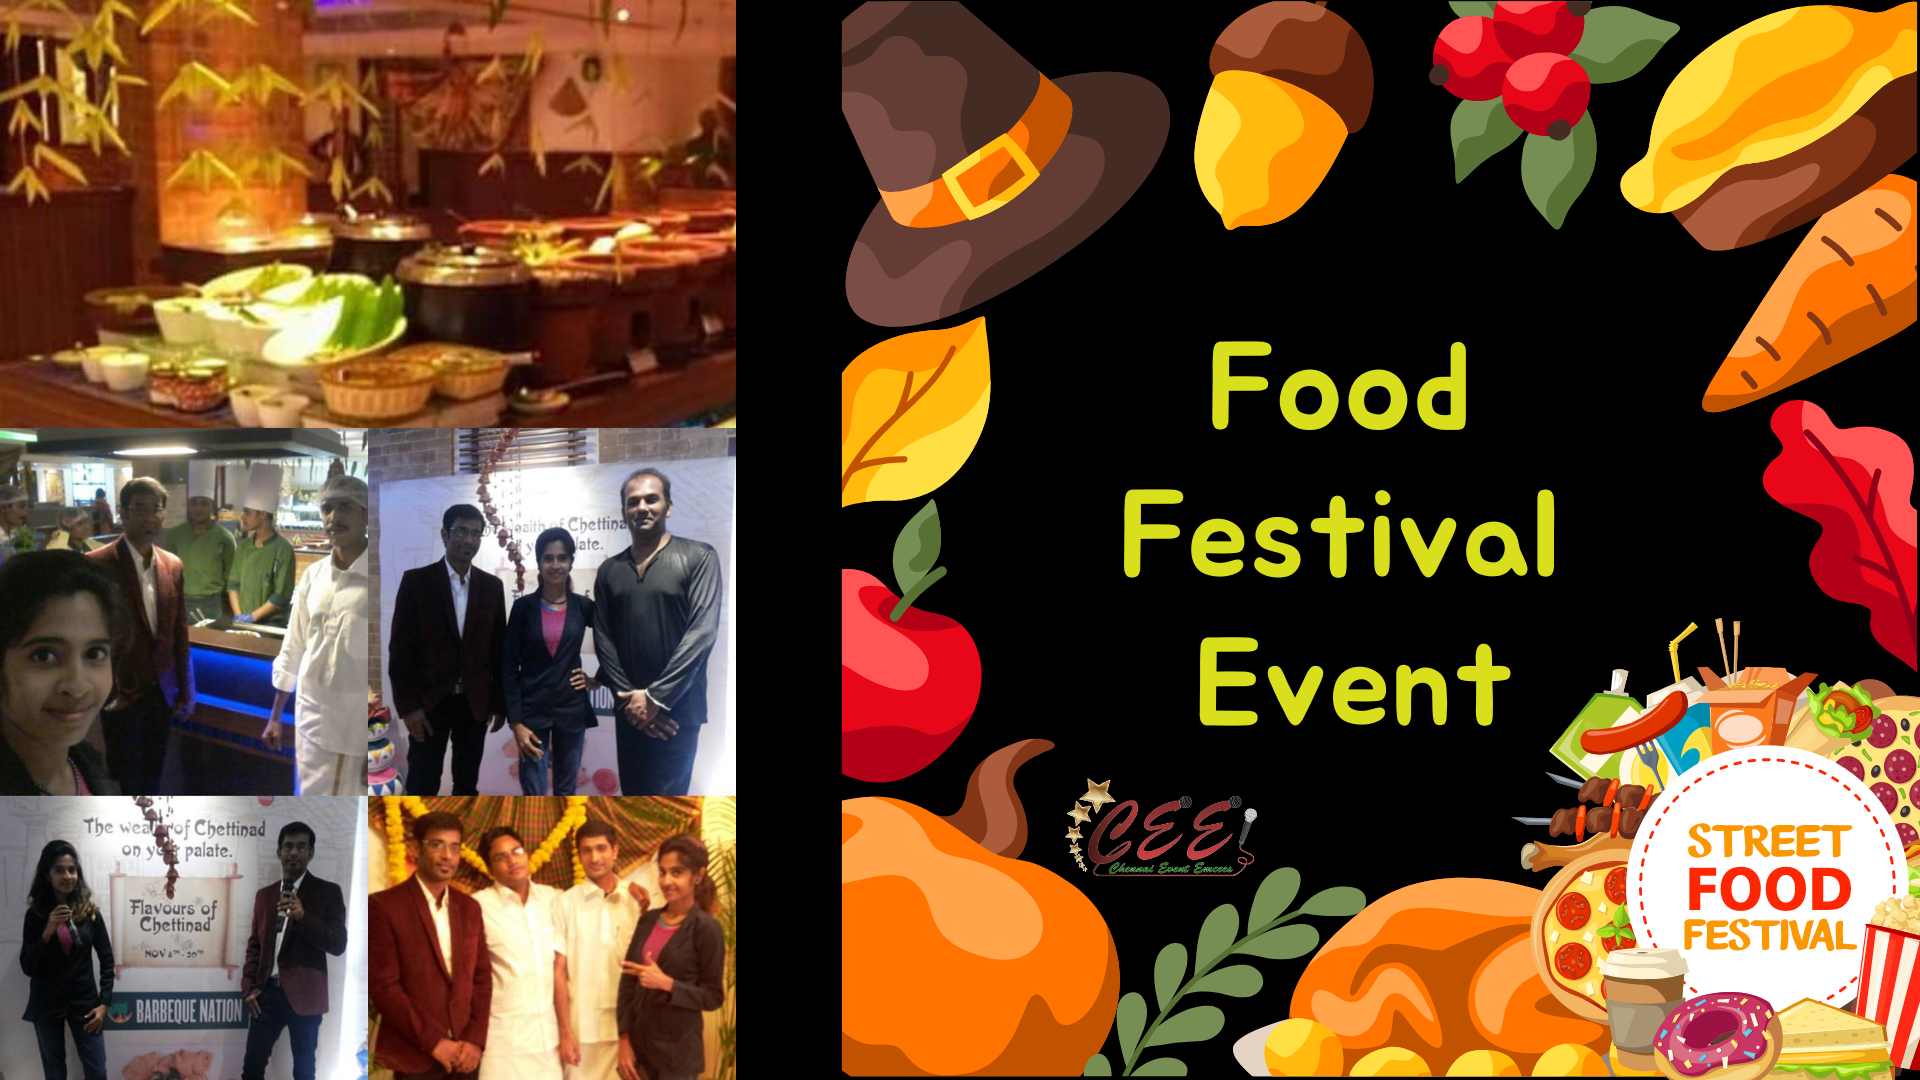 Event Plan for Food Festival Event by Chennai Male Emcee Thamizharasan Karunakaran